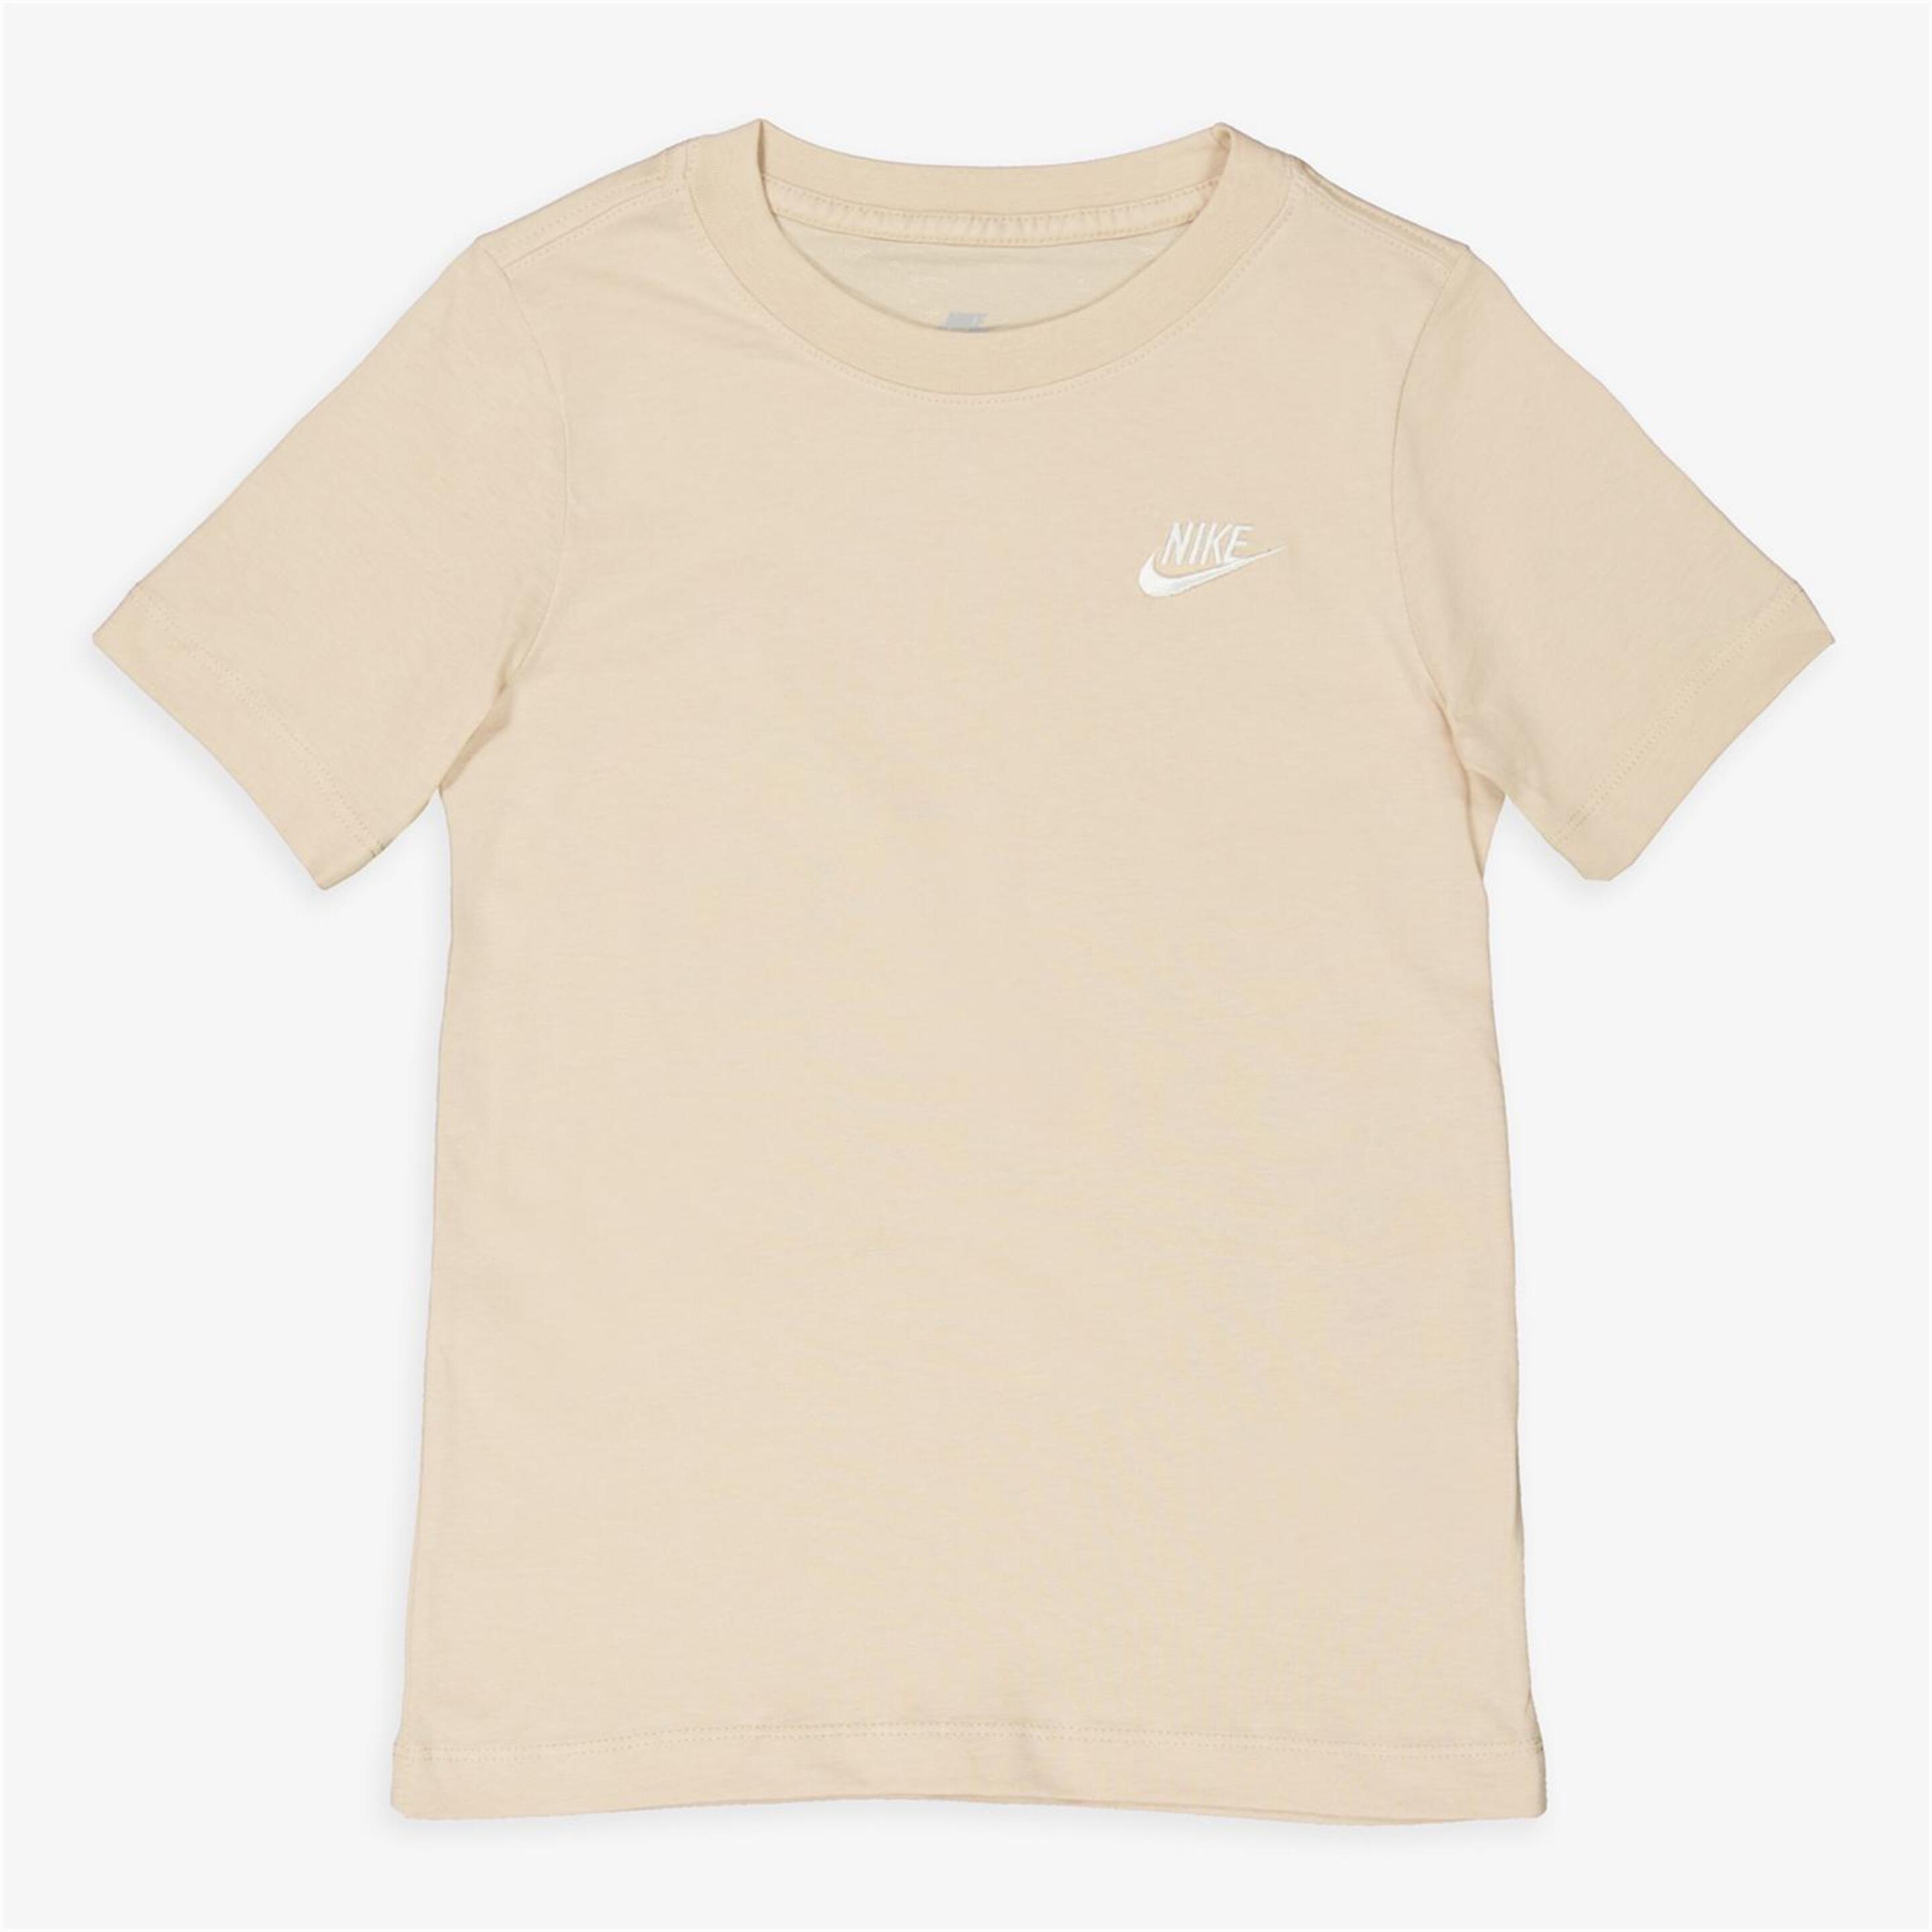 T-shirt Nike - marron - T-shirt Rapaz